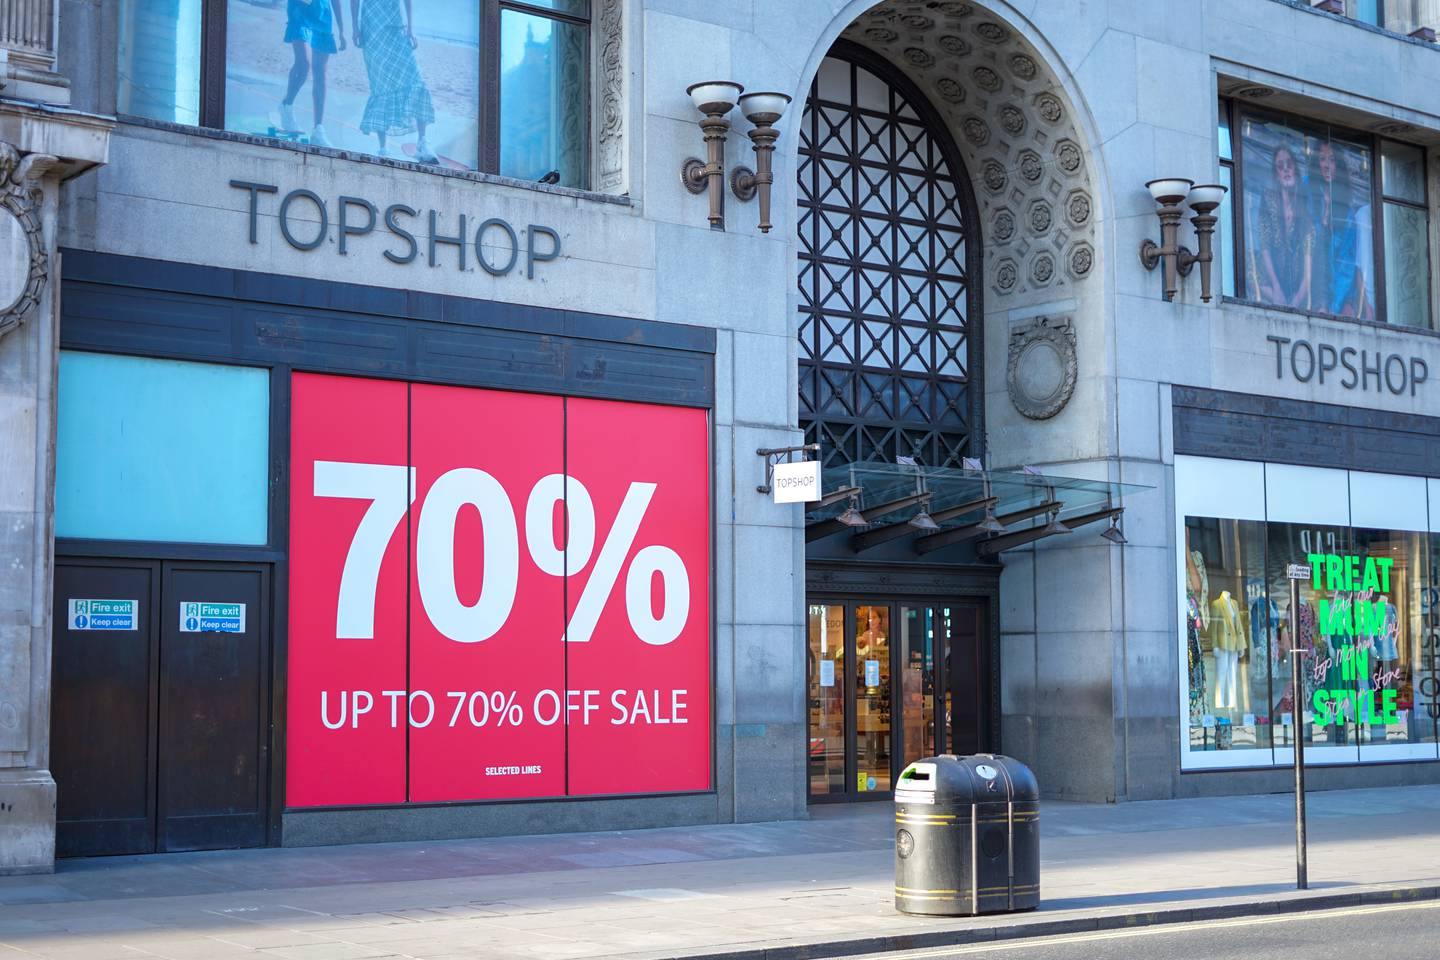 Topshop store in London, UK. Shutterstock.